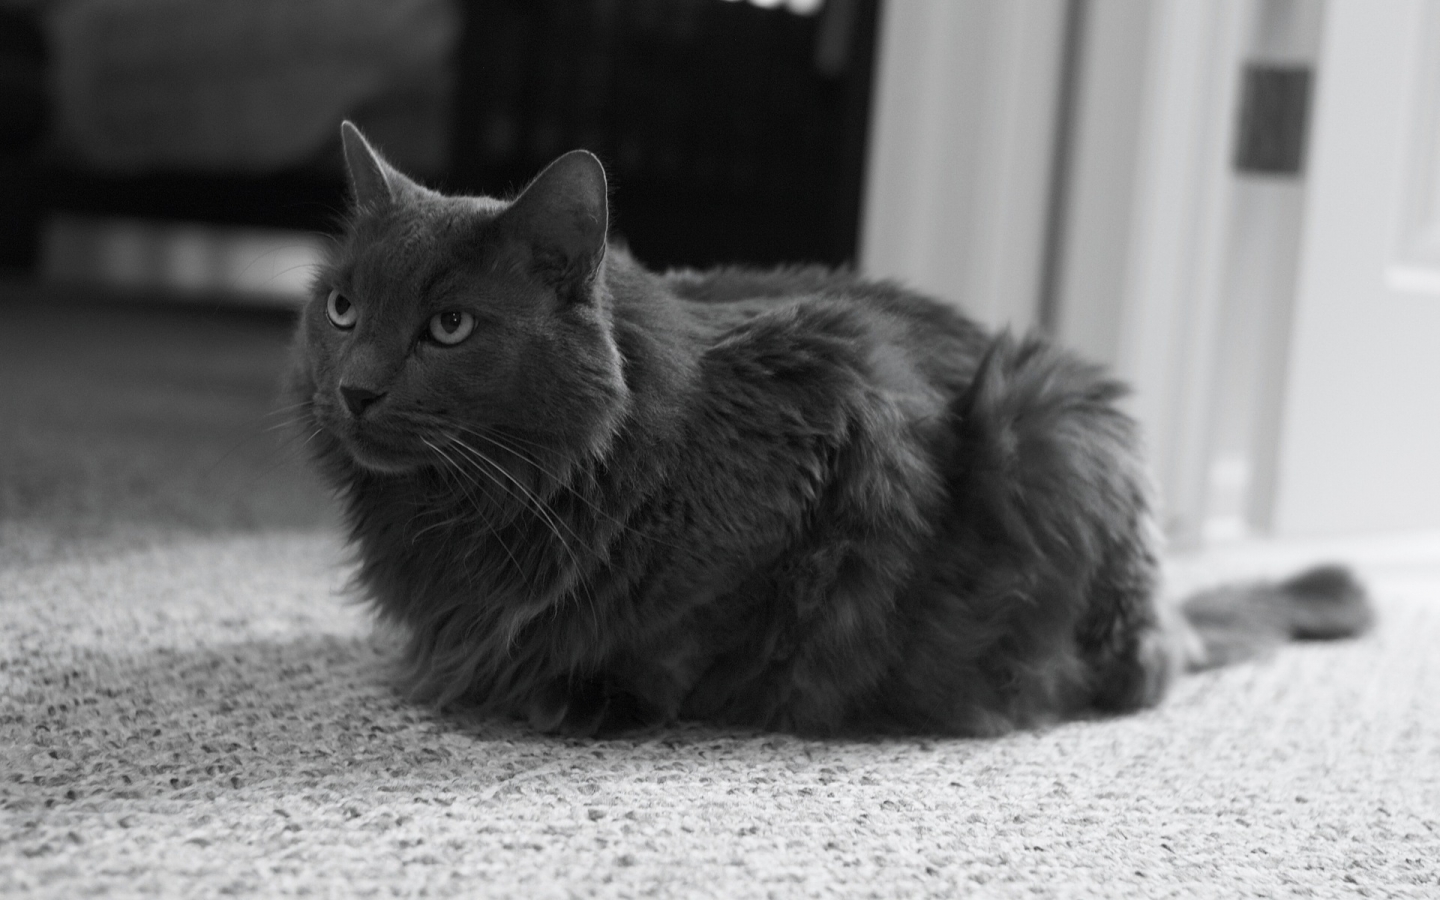 Monochrome Nebelung Cat for 1440 x 900 widescreen resolution